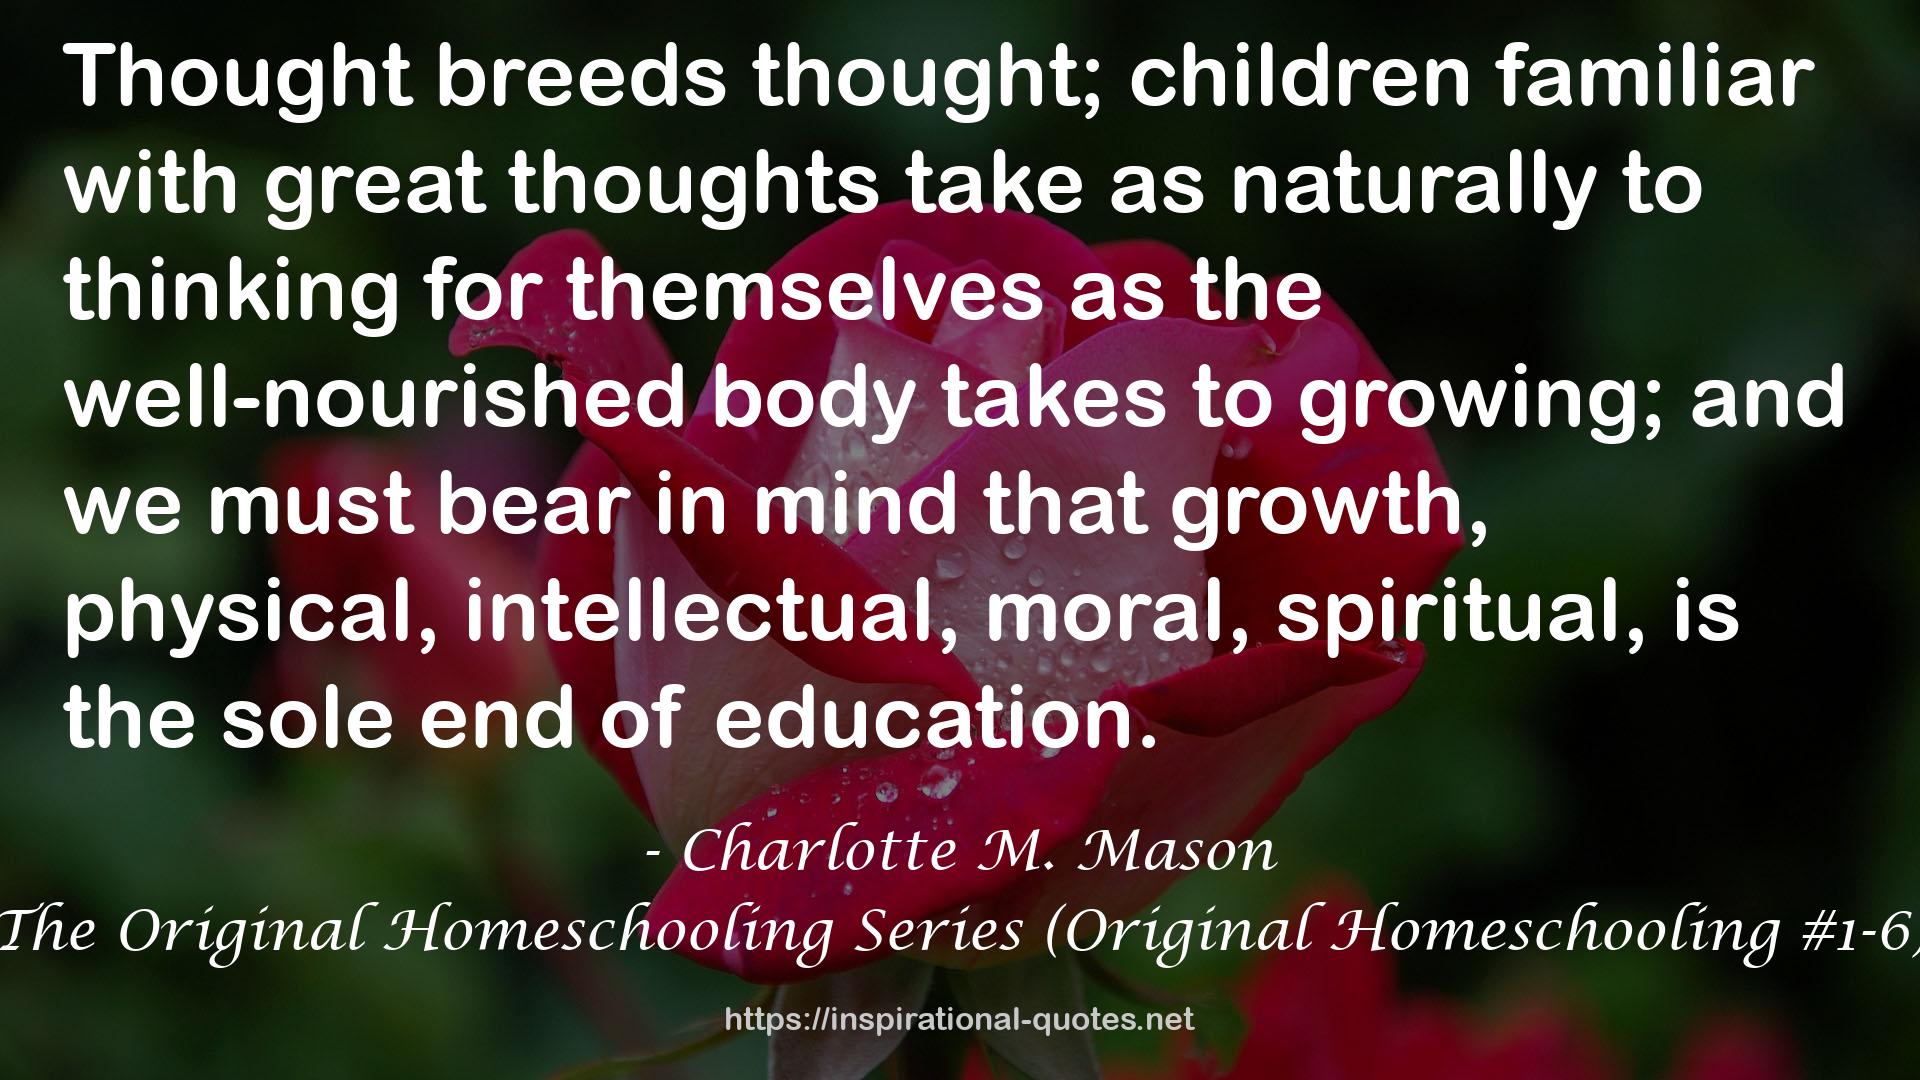 Charlotte M. Mason QUOTES